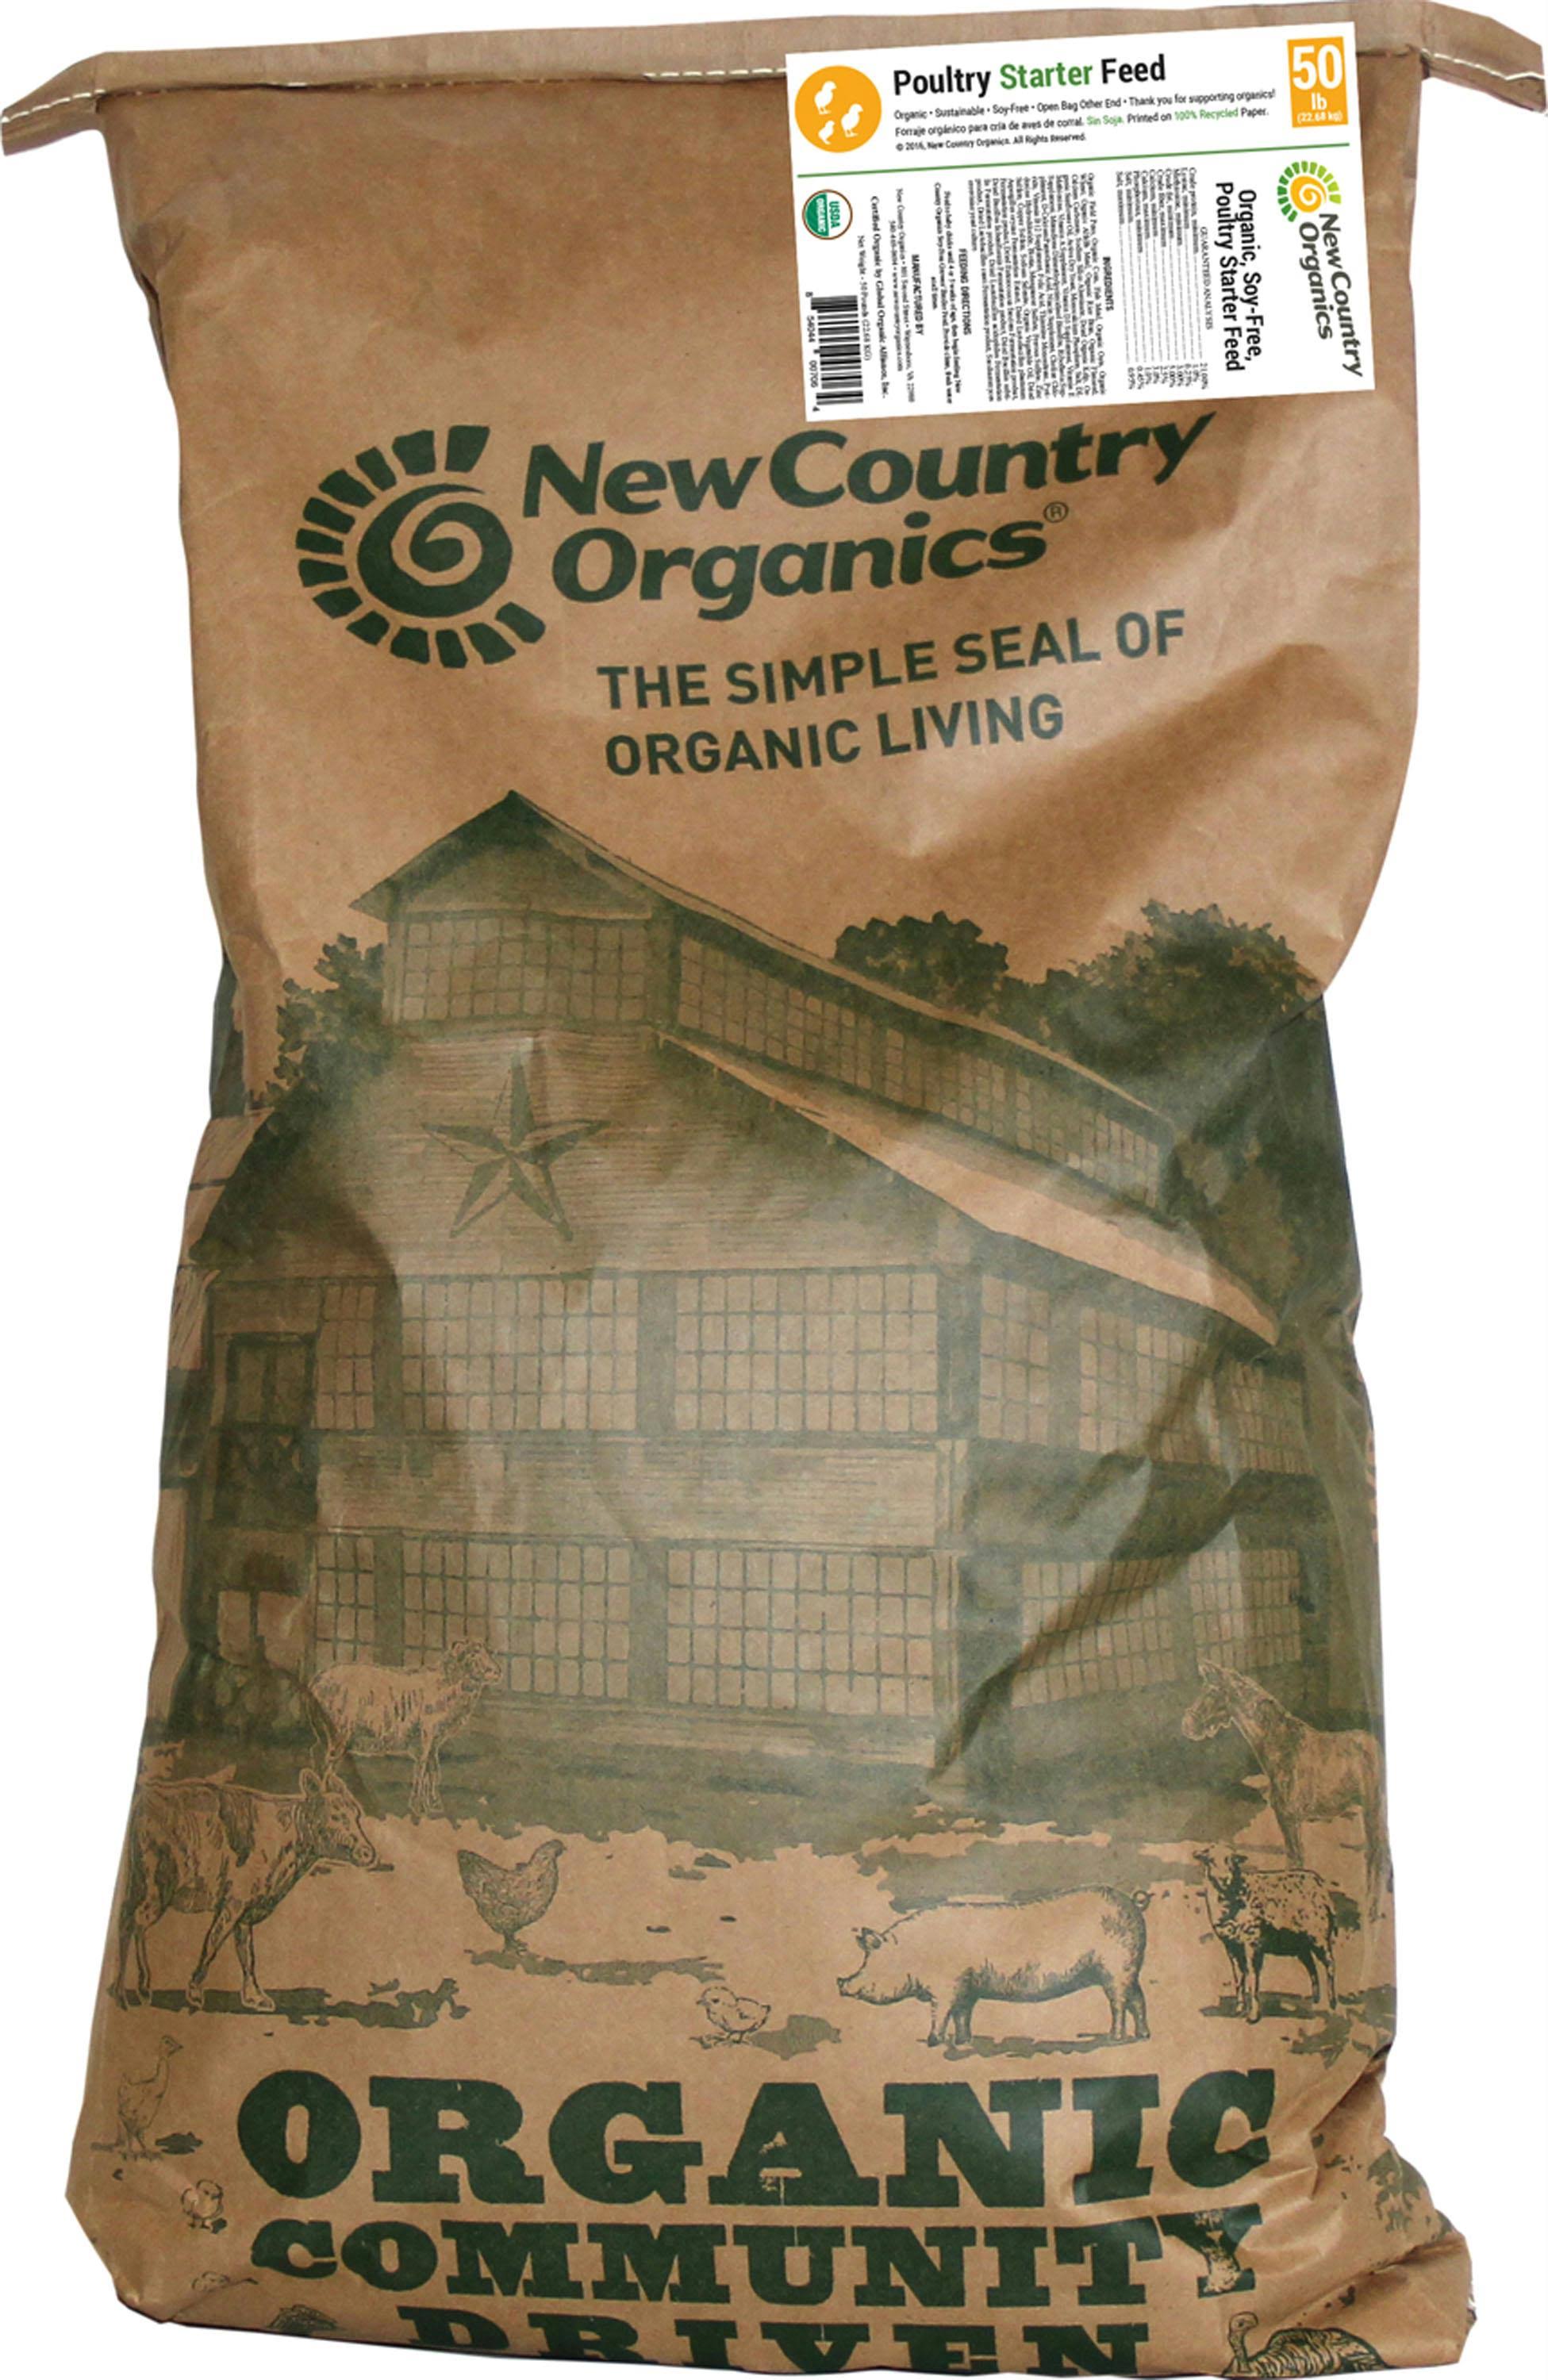 New Country Organics - Organic Soy Free Starter